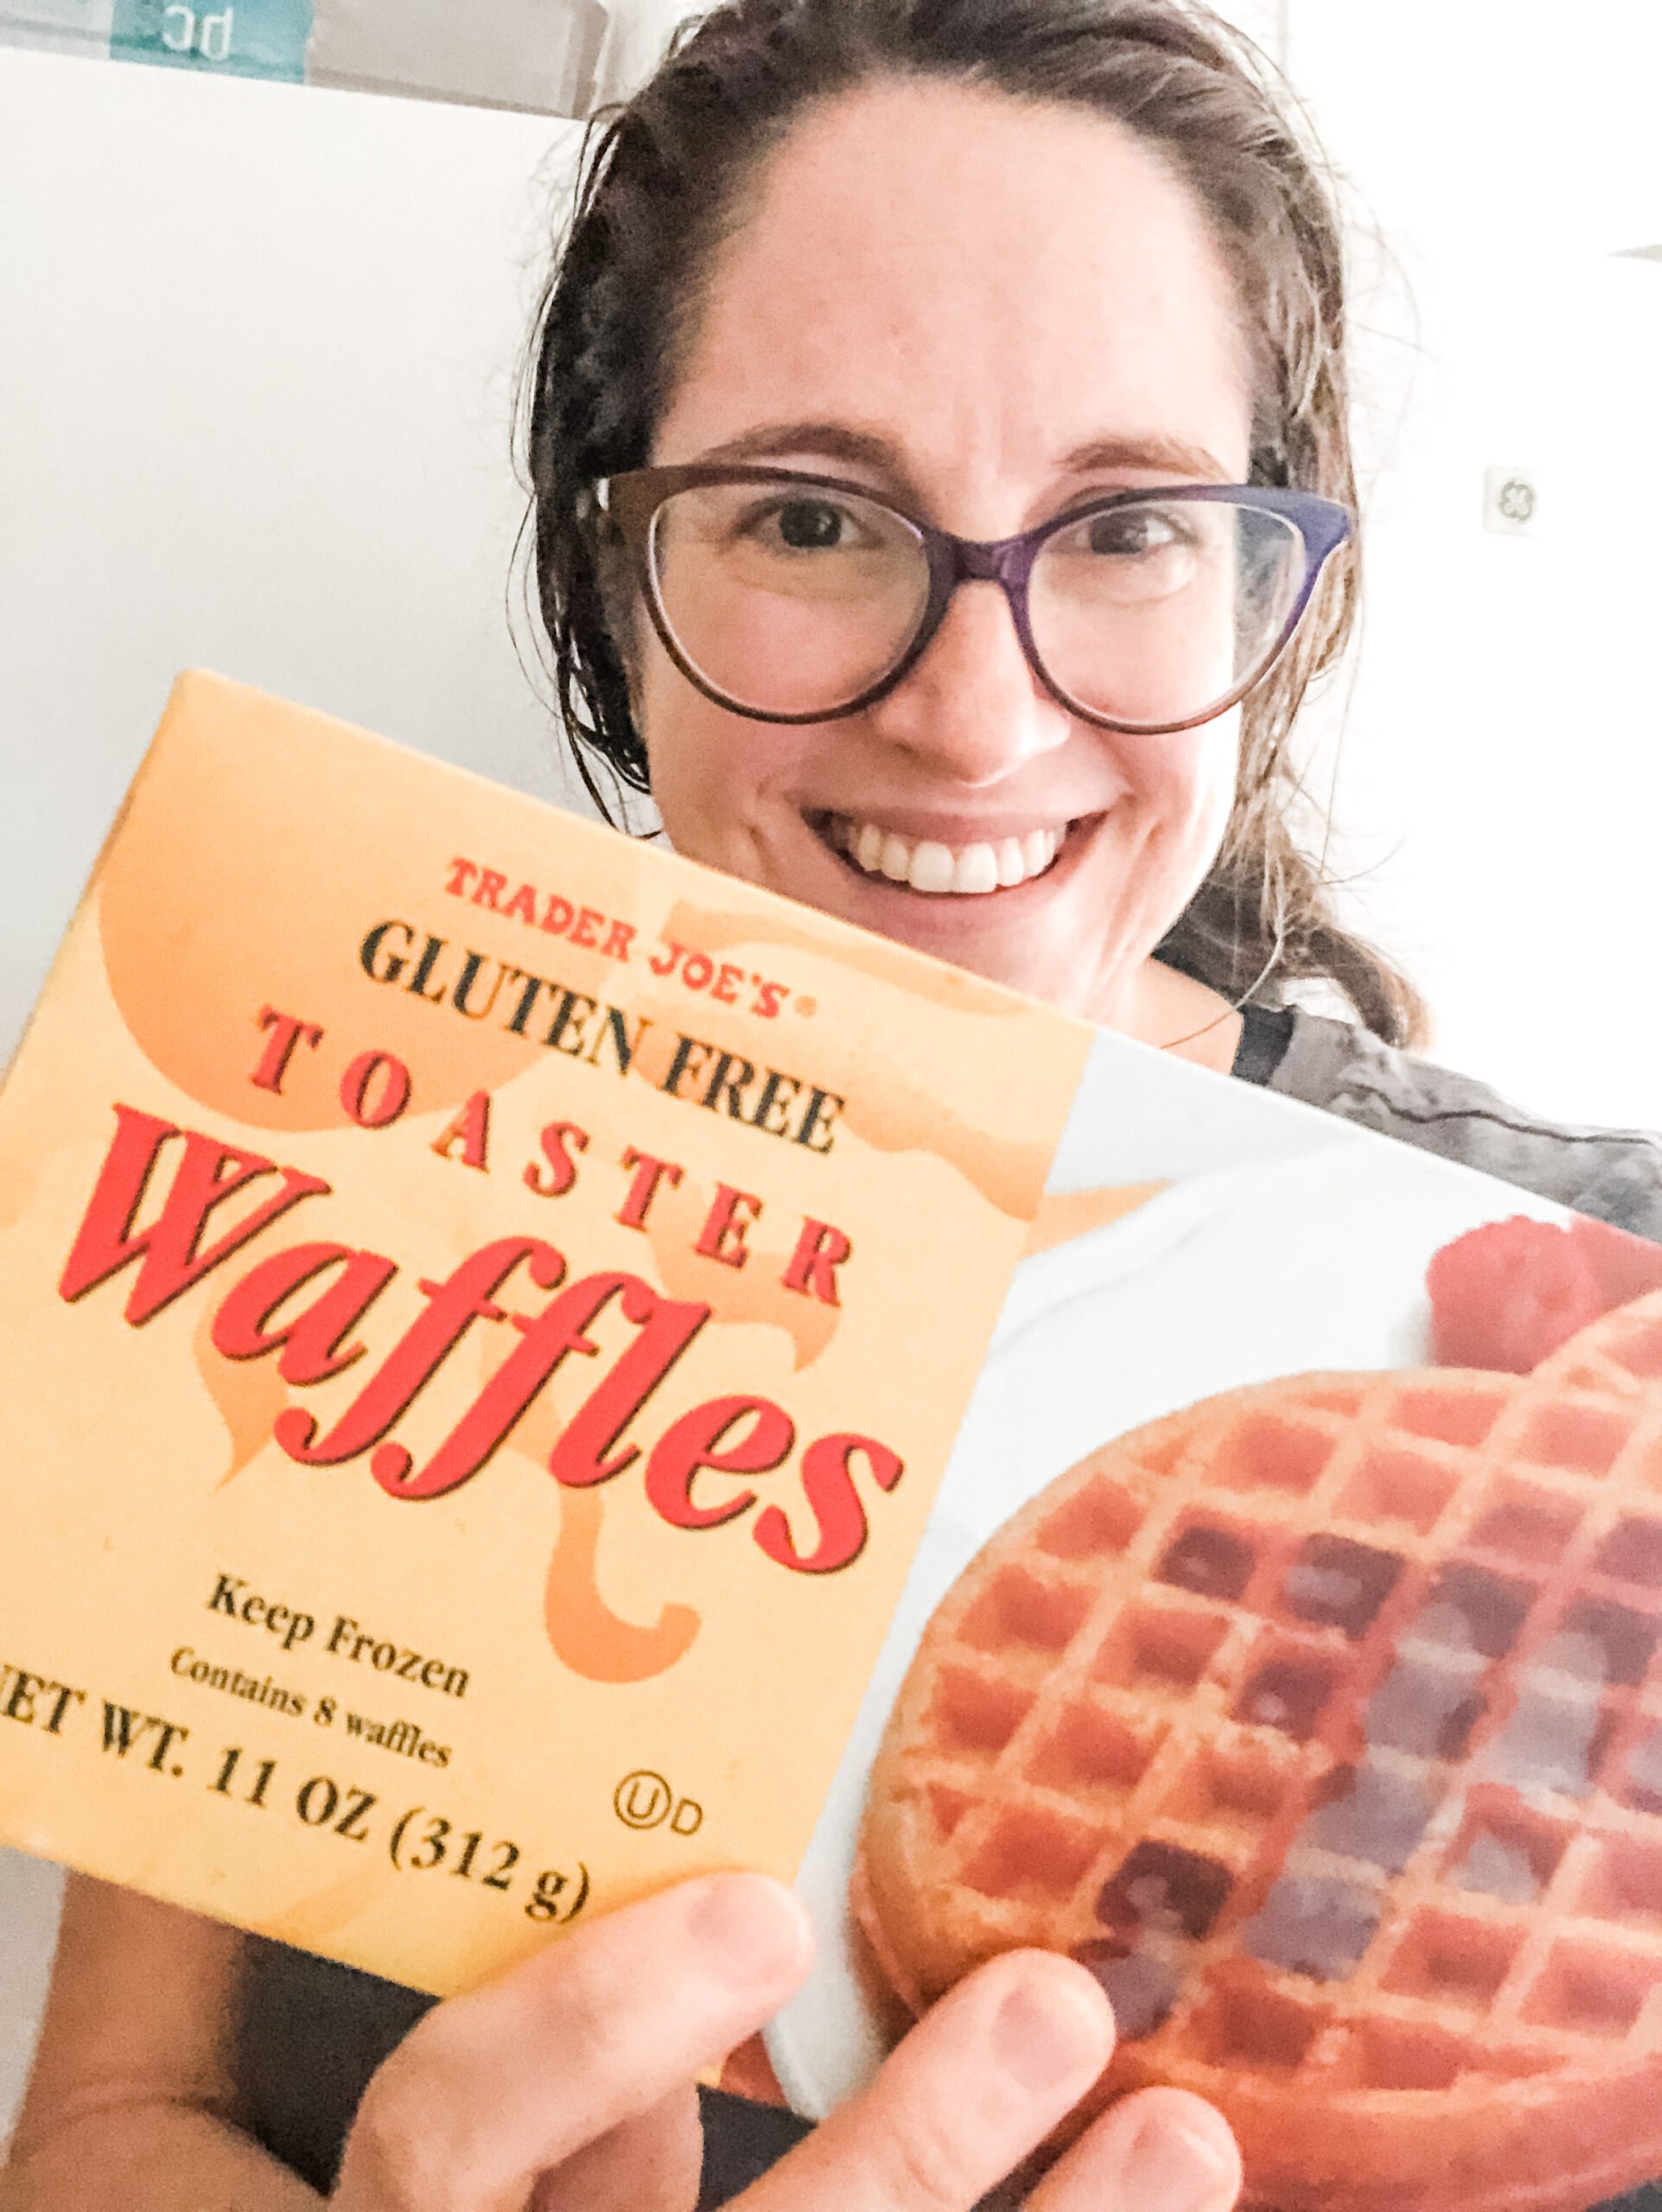 6 Best Gluten Free Frozen Waffles (+ Where to Buy Them!) - The Helpful GF